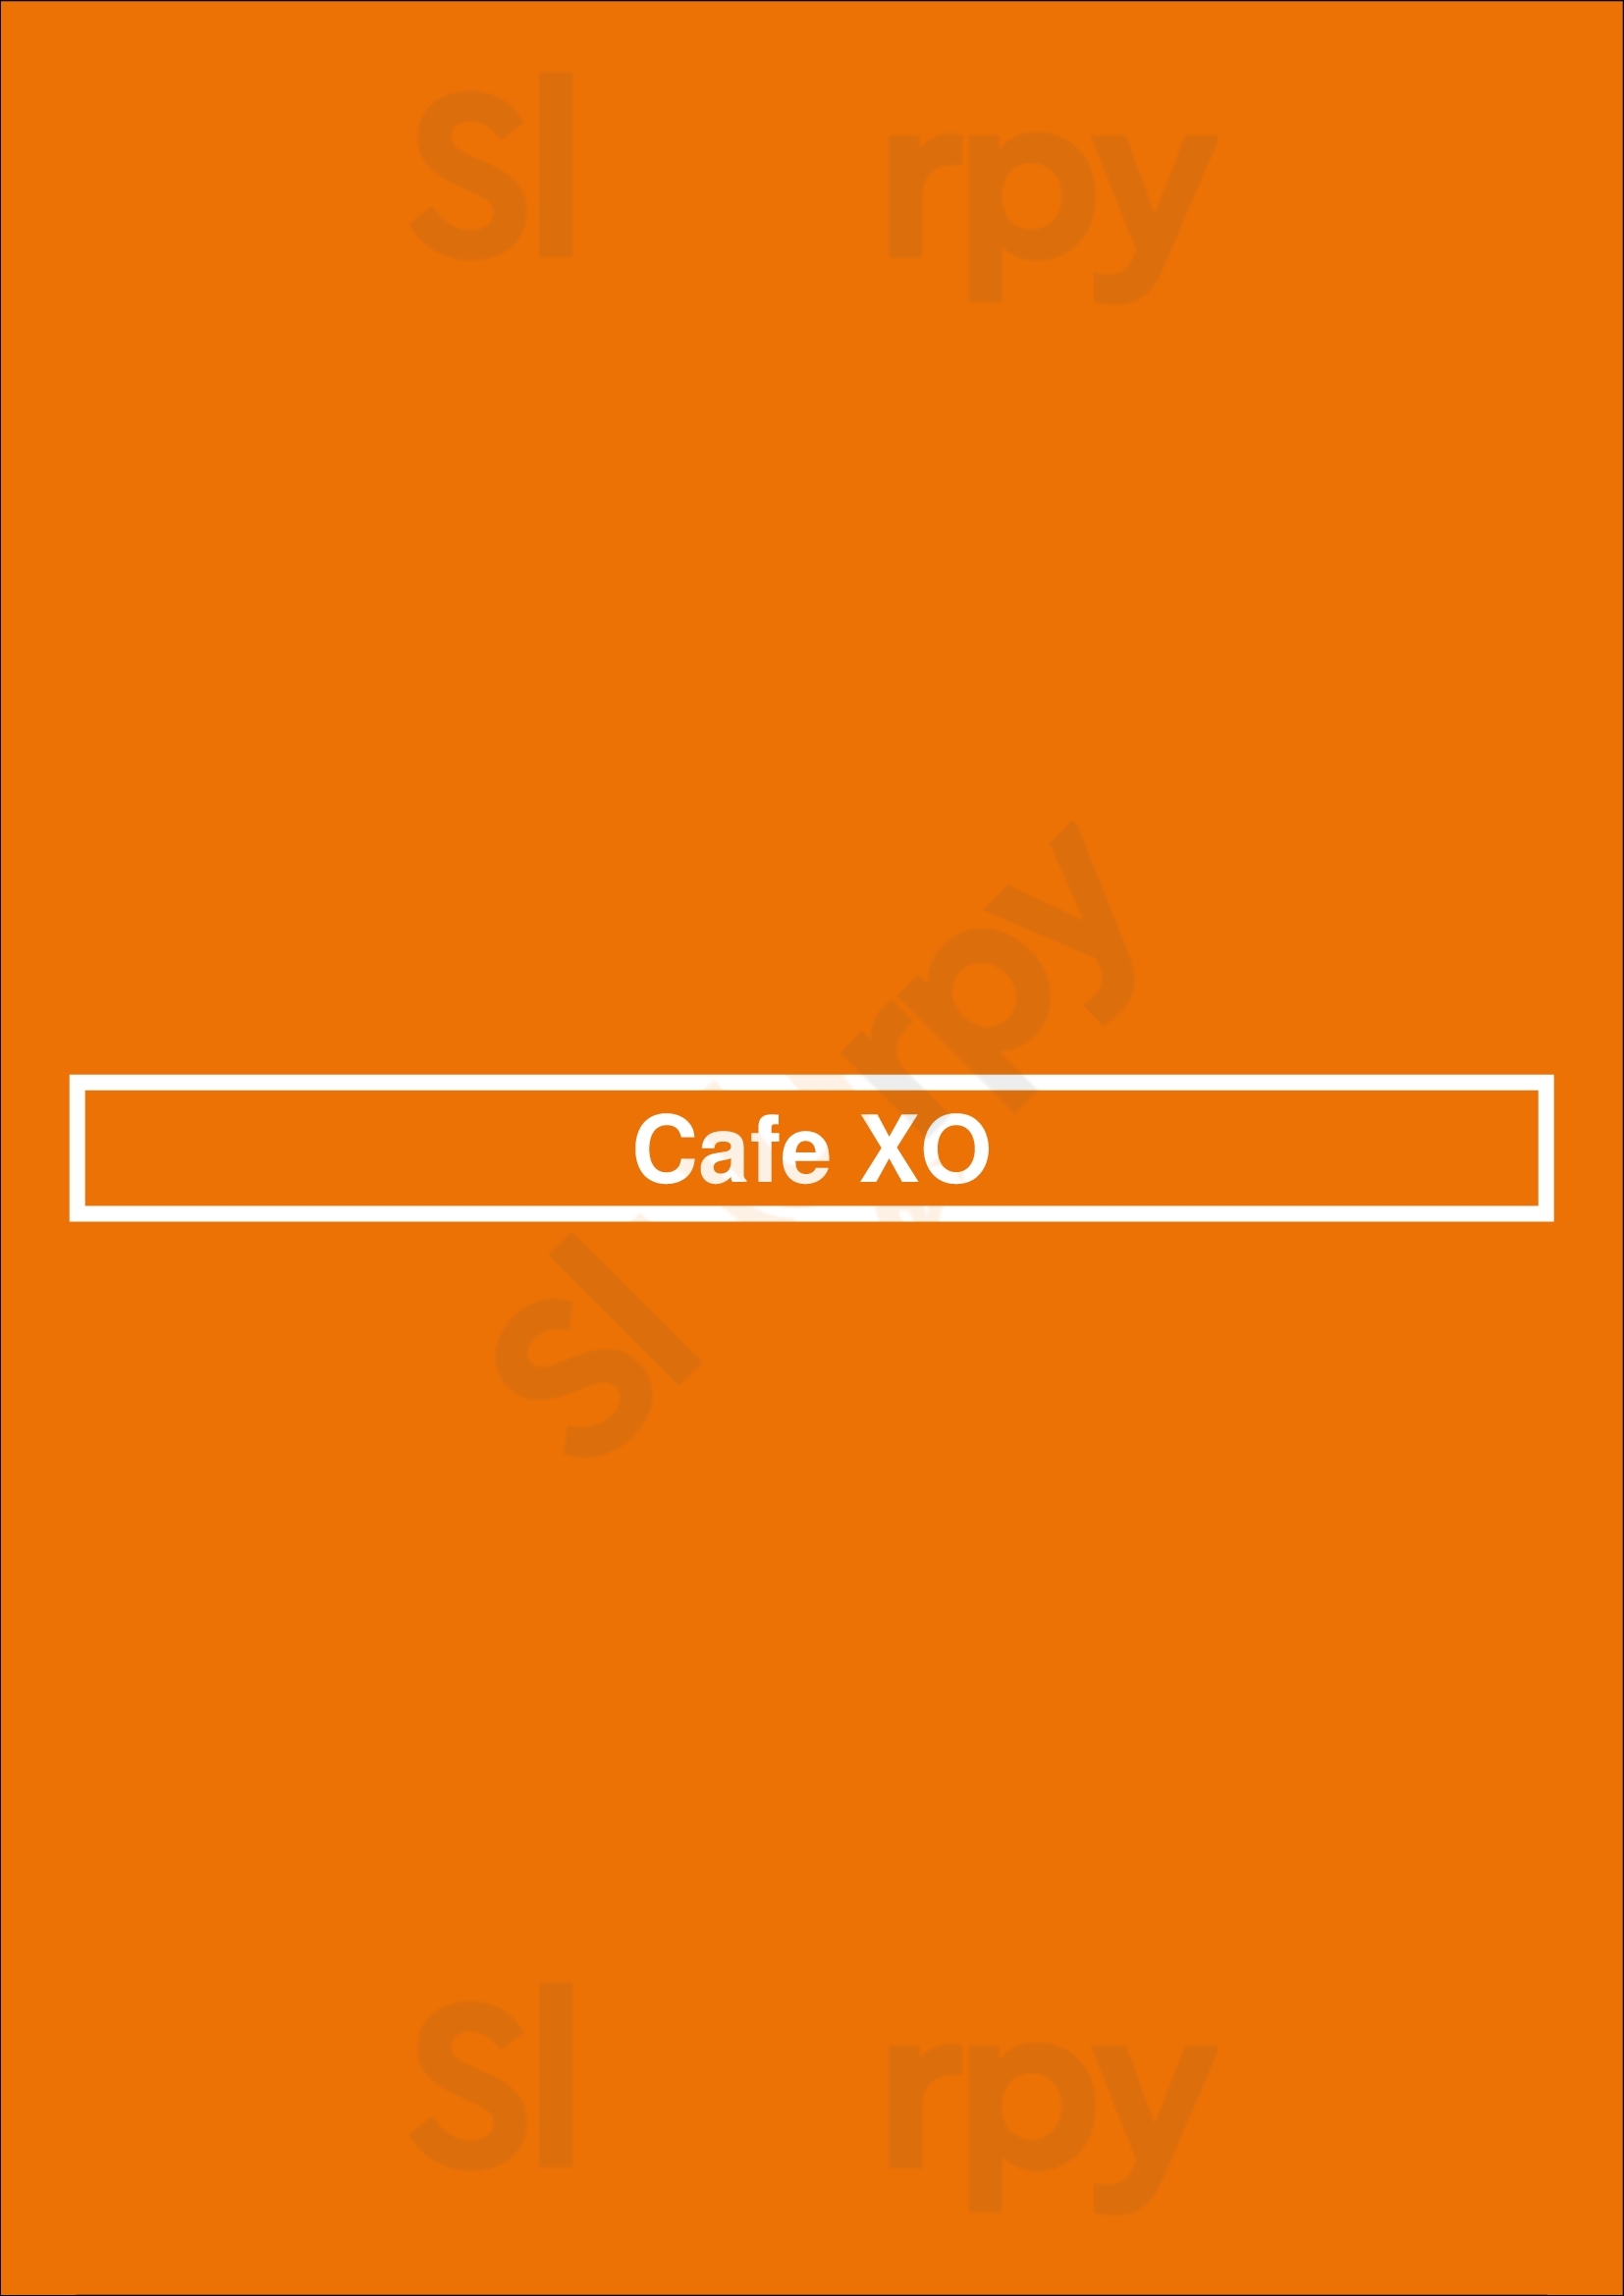 Cafe Xo Haarlem Menu - 1